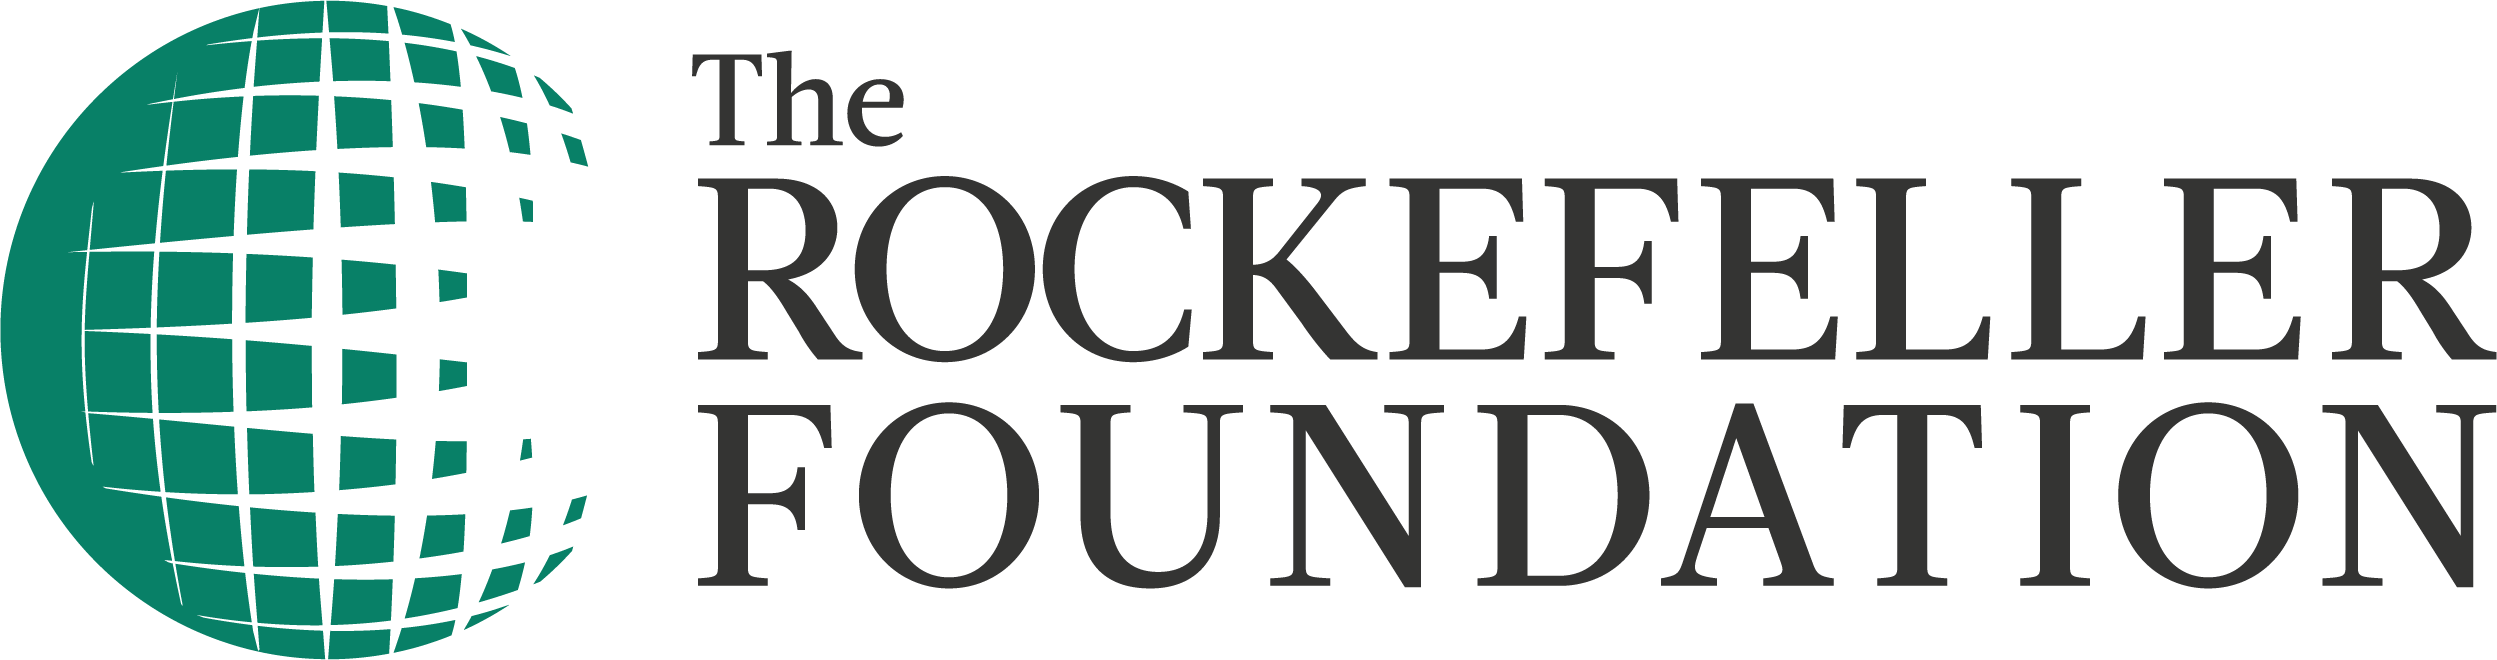 The Rockefeller Fundation